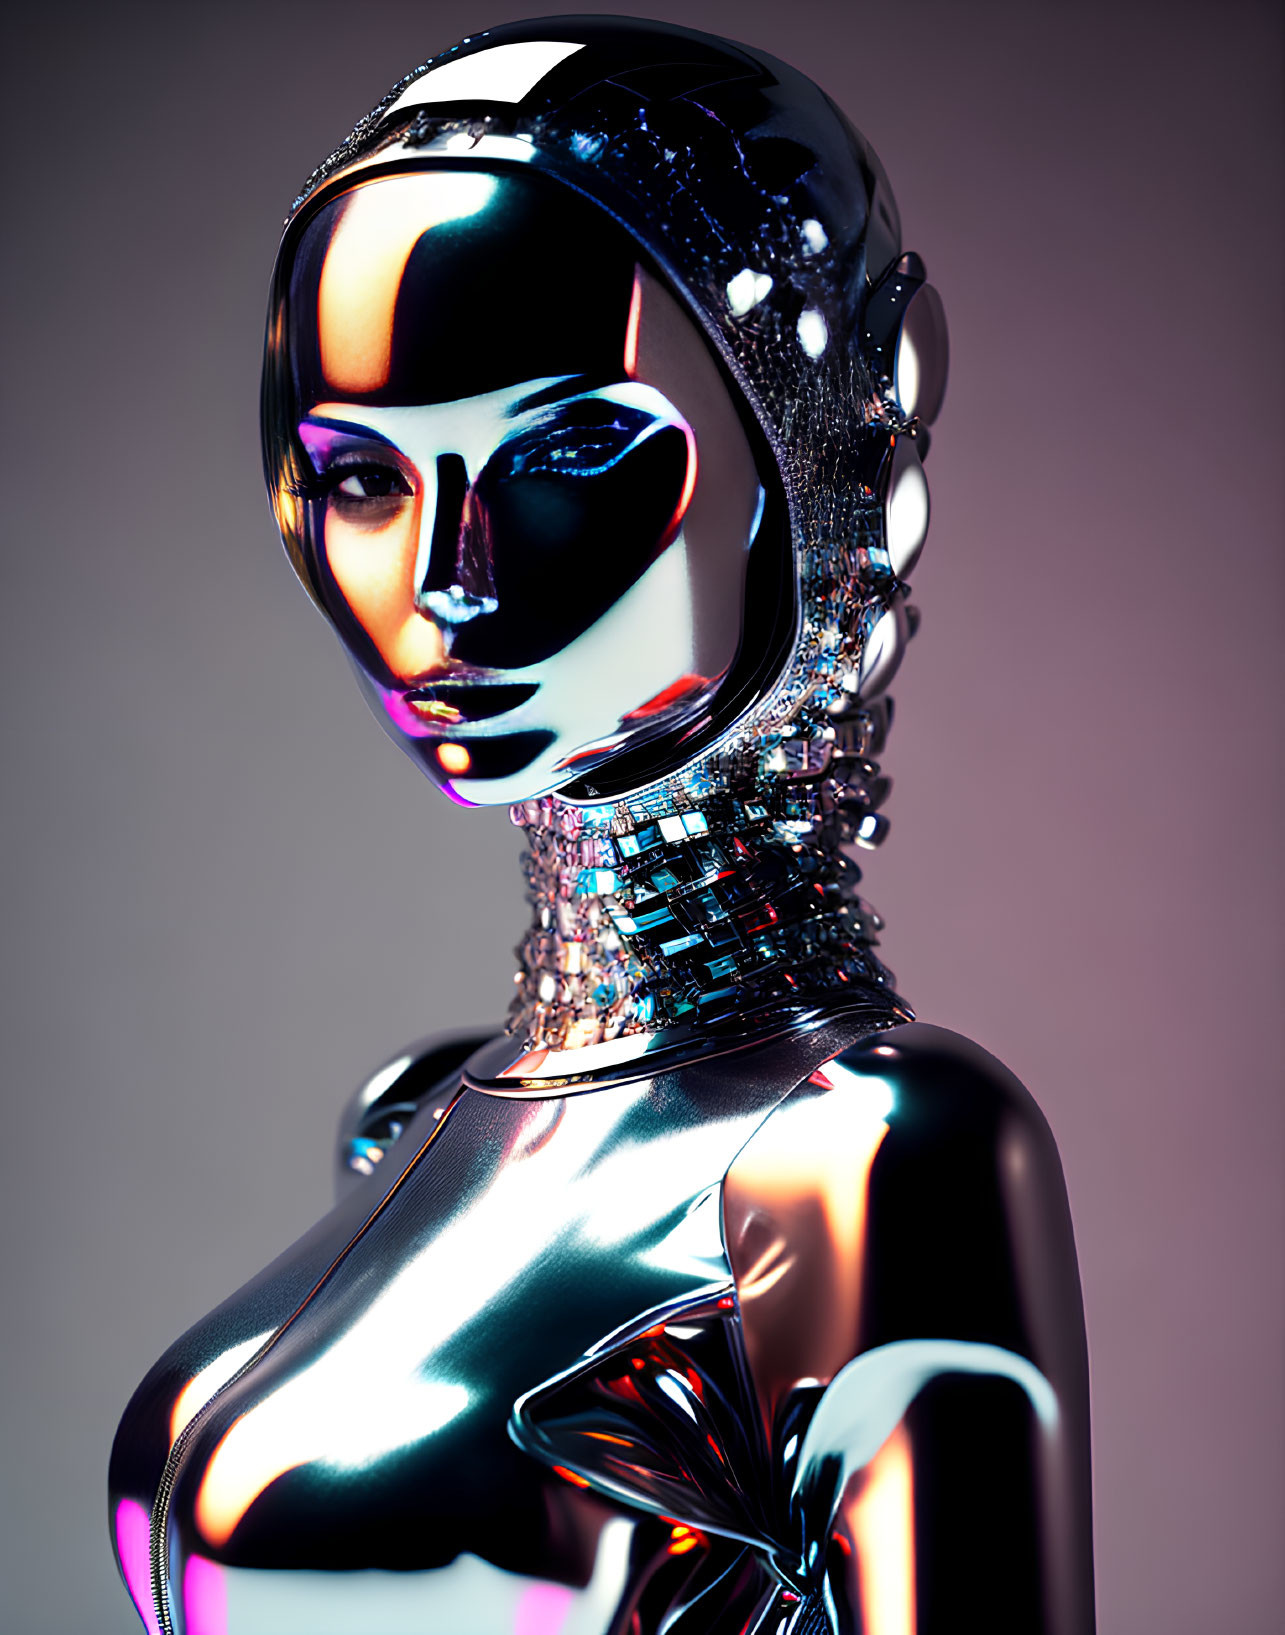 Reflective metallic female robot on pink background